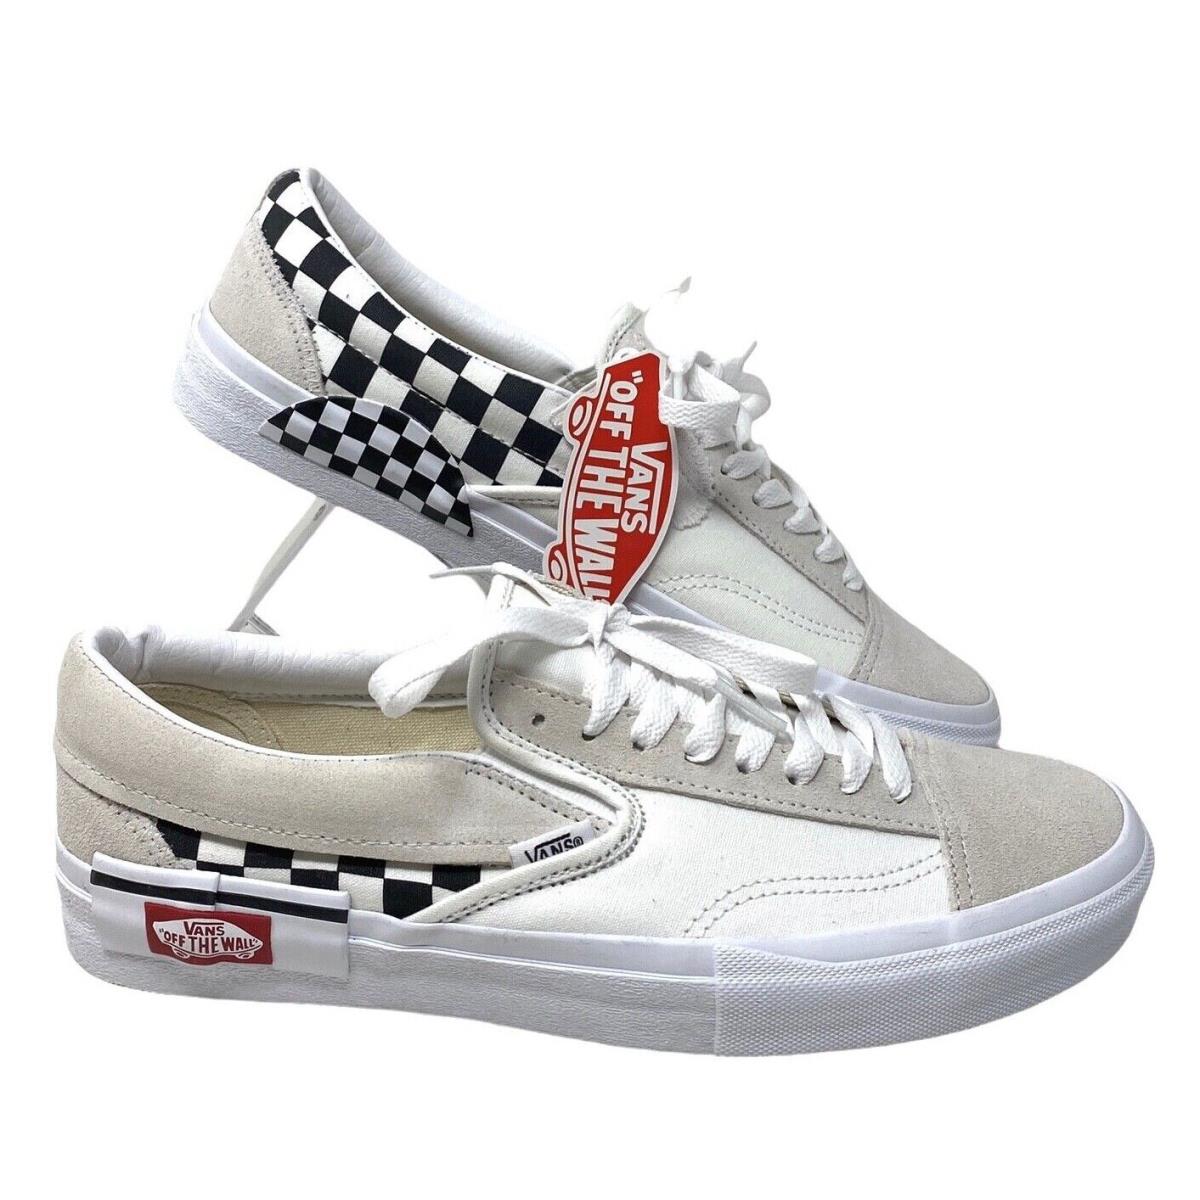 Vans Slip On Cream Check Sneakers Suede Canvas Shoes Skate Men Custom ALSU01255